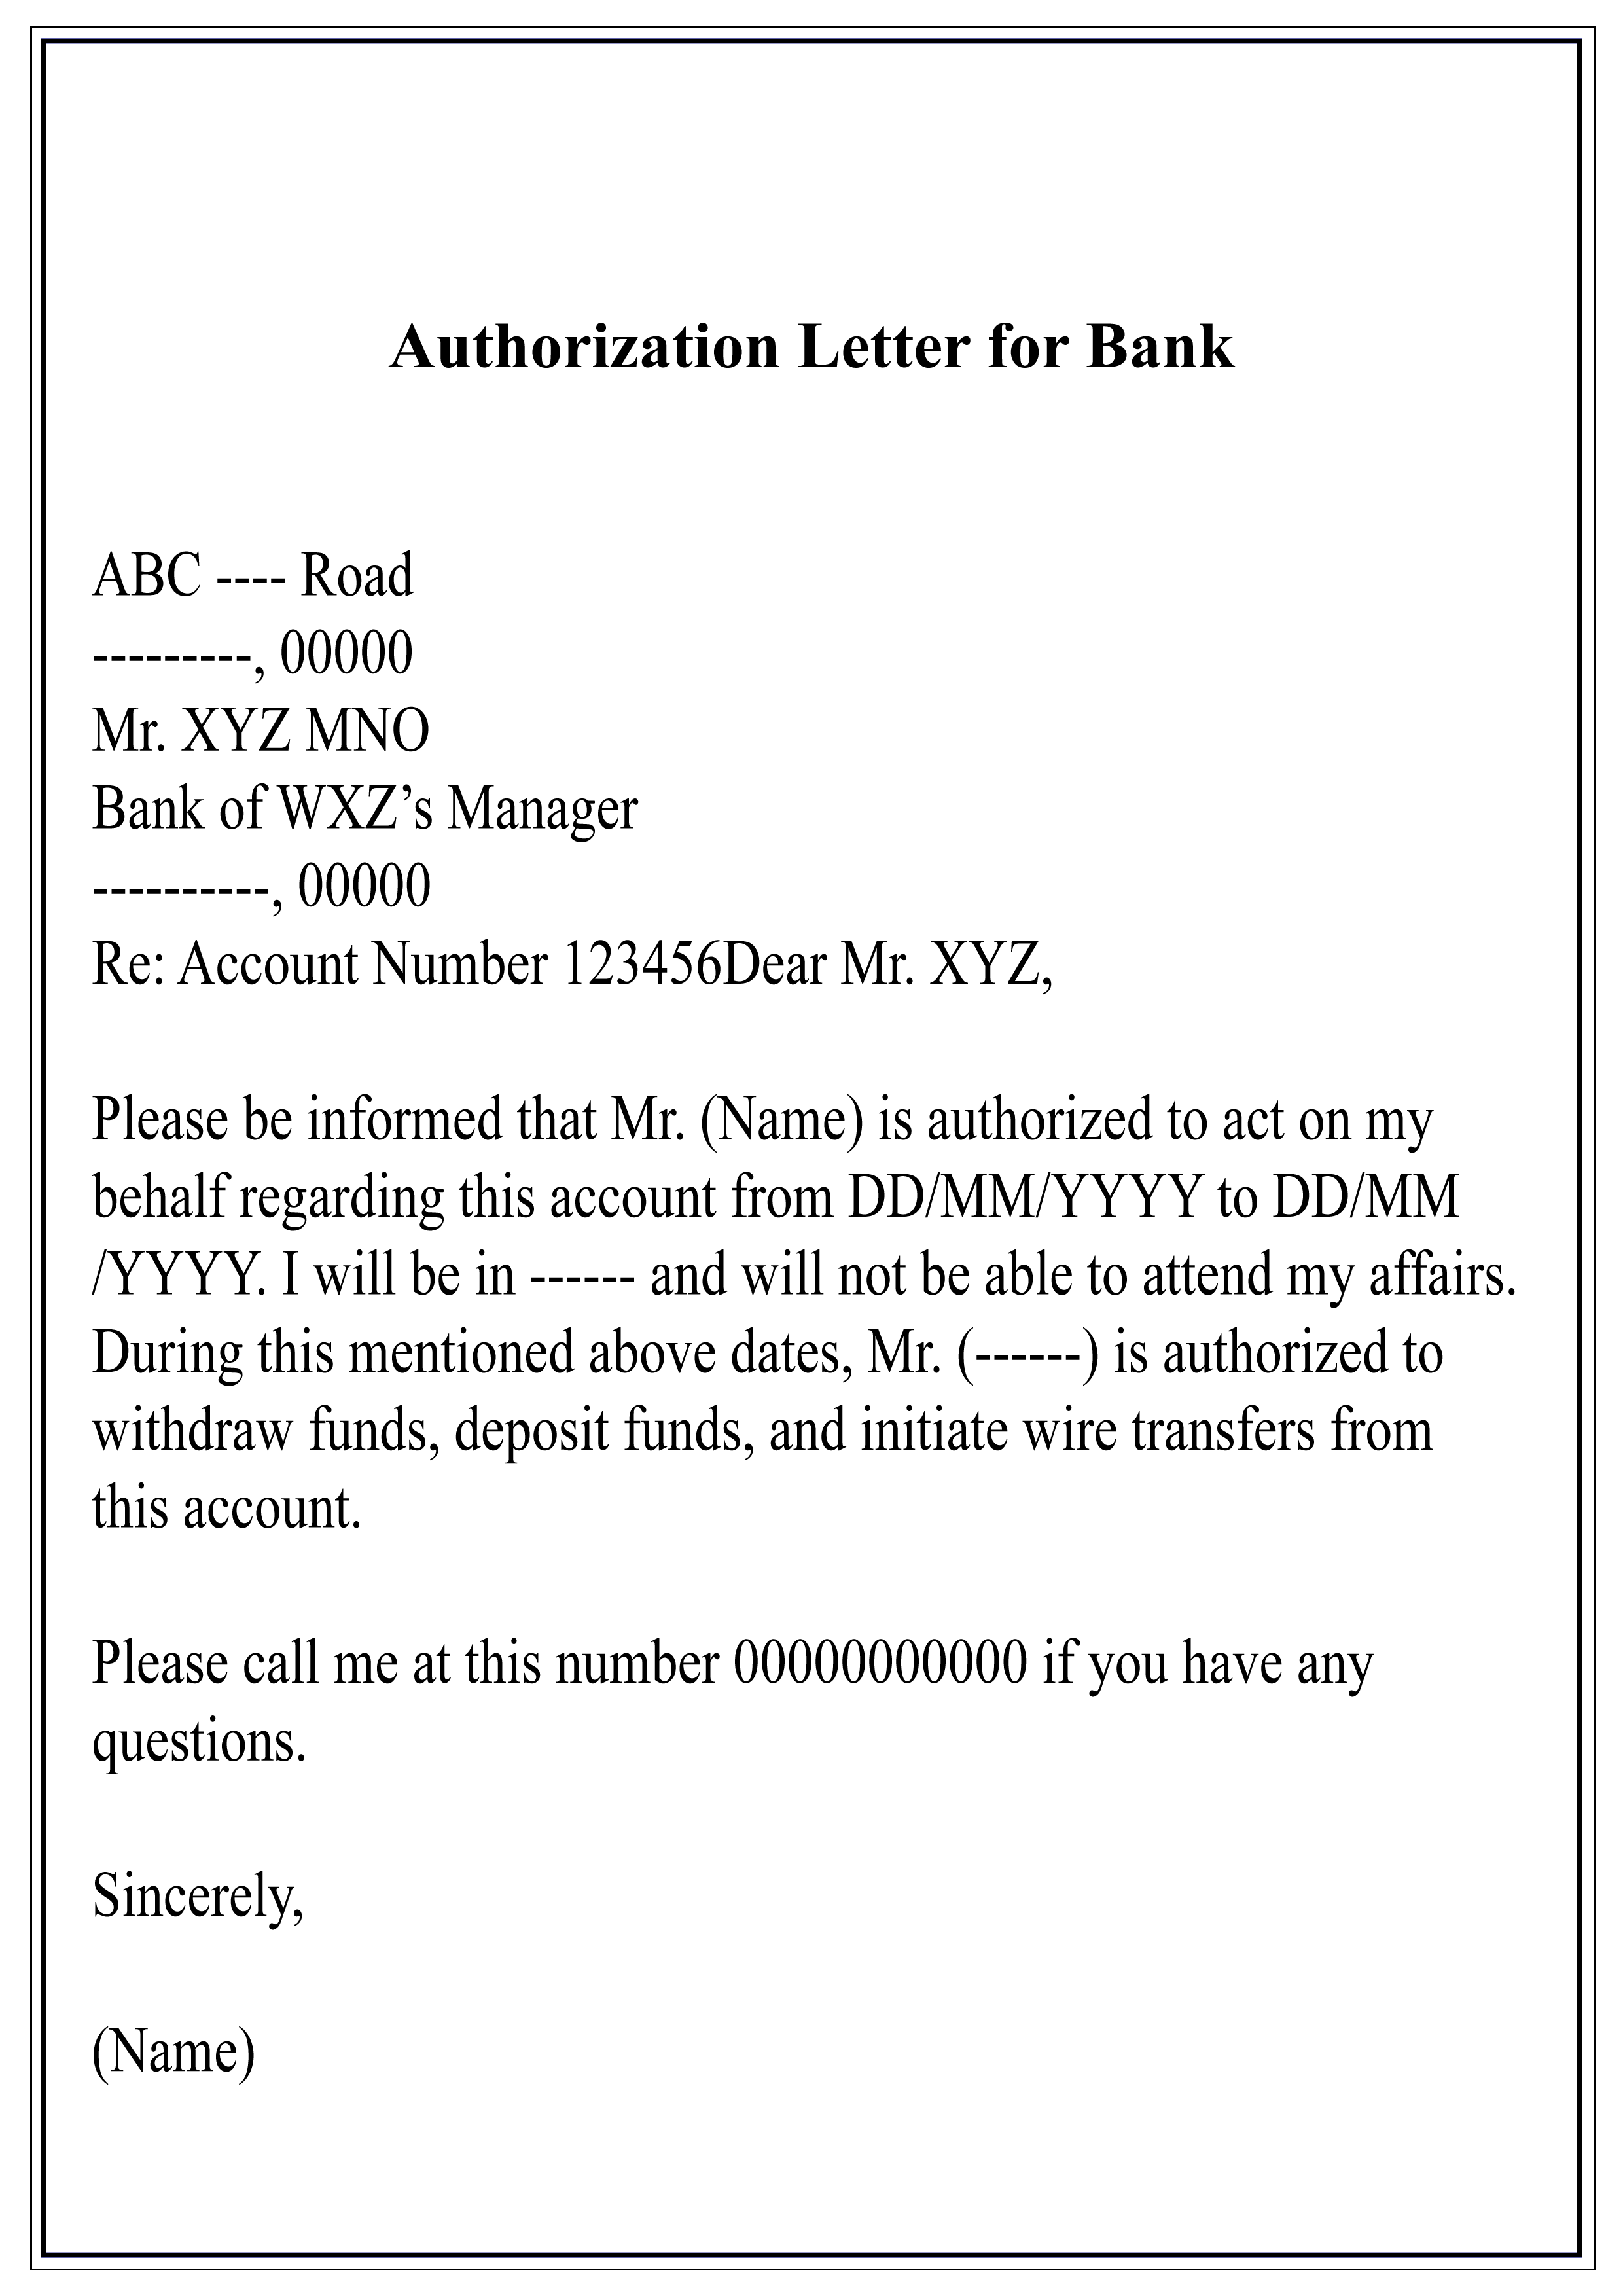 Bank Authorization Letter